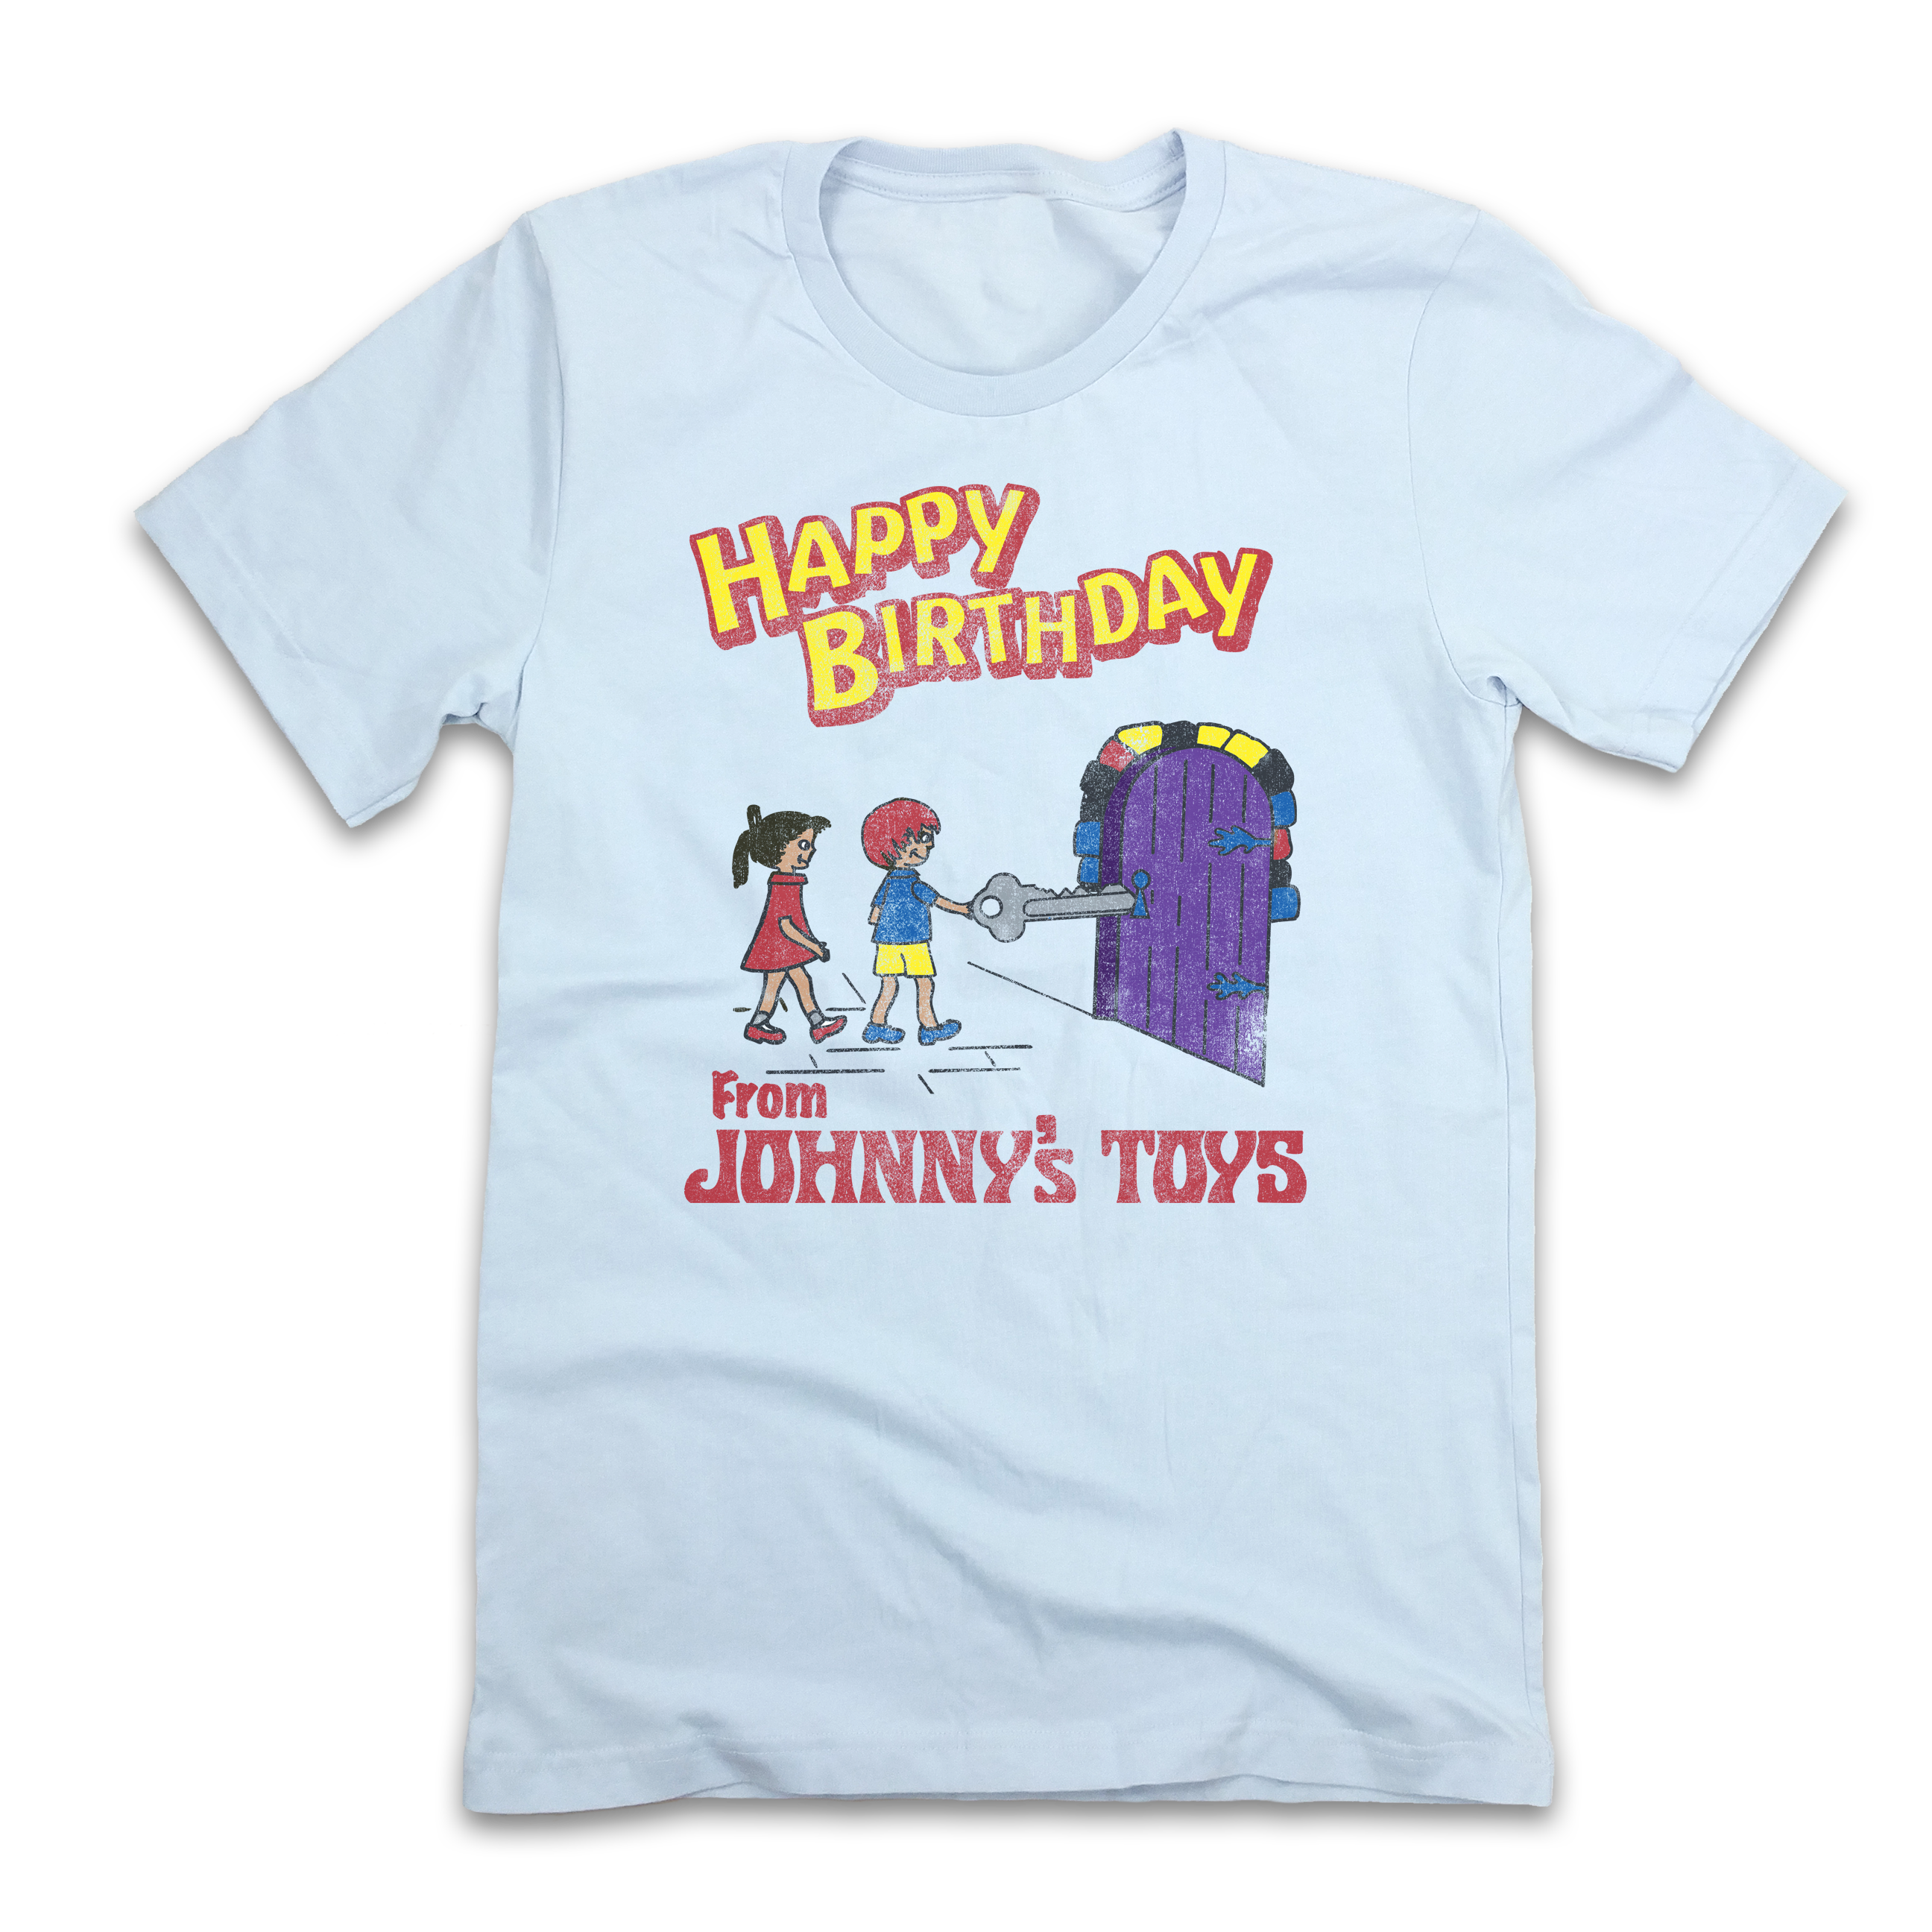 Johnny's Toys - Old School Shirts- Retro Sports T Shirts